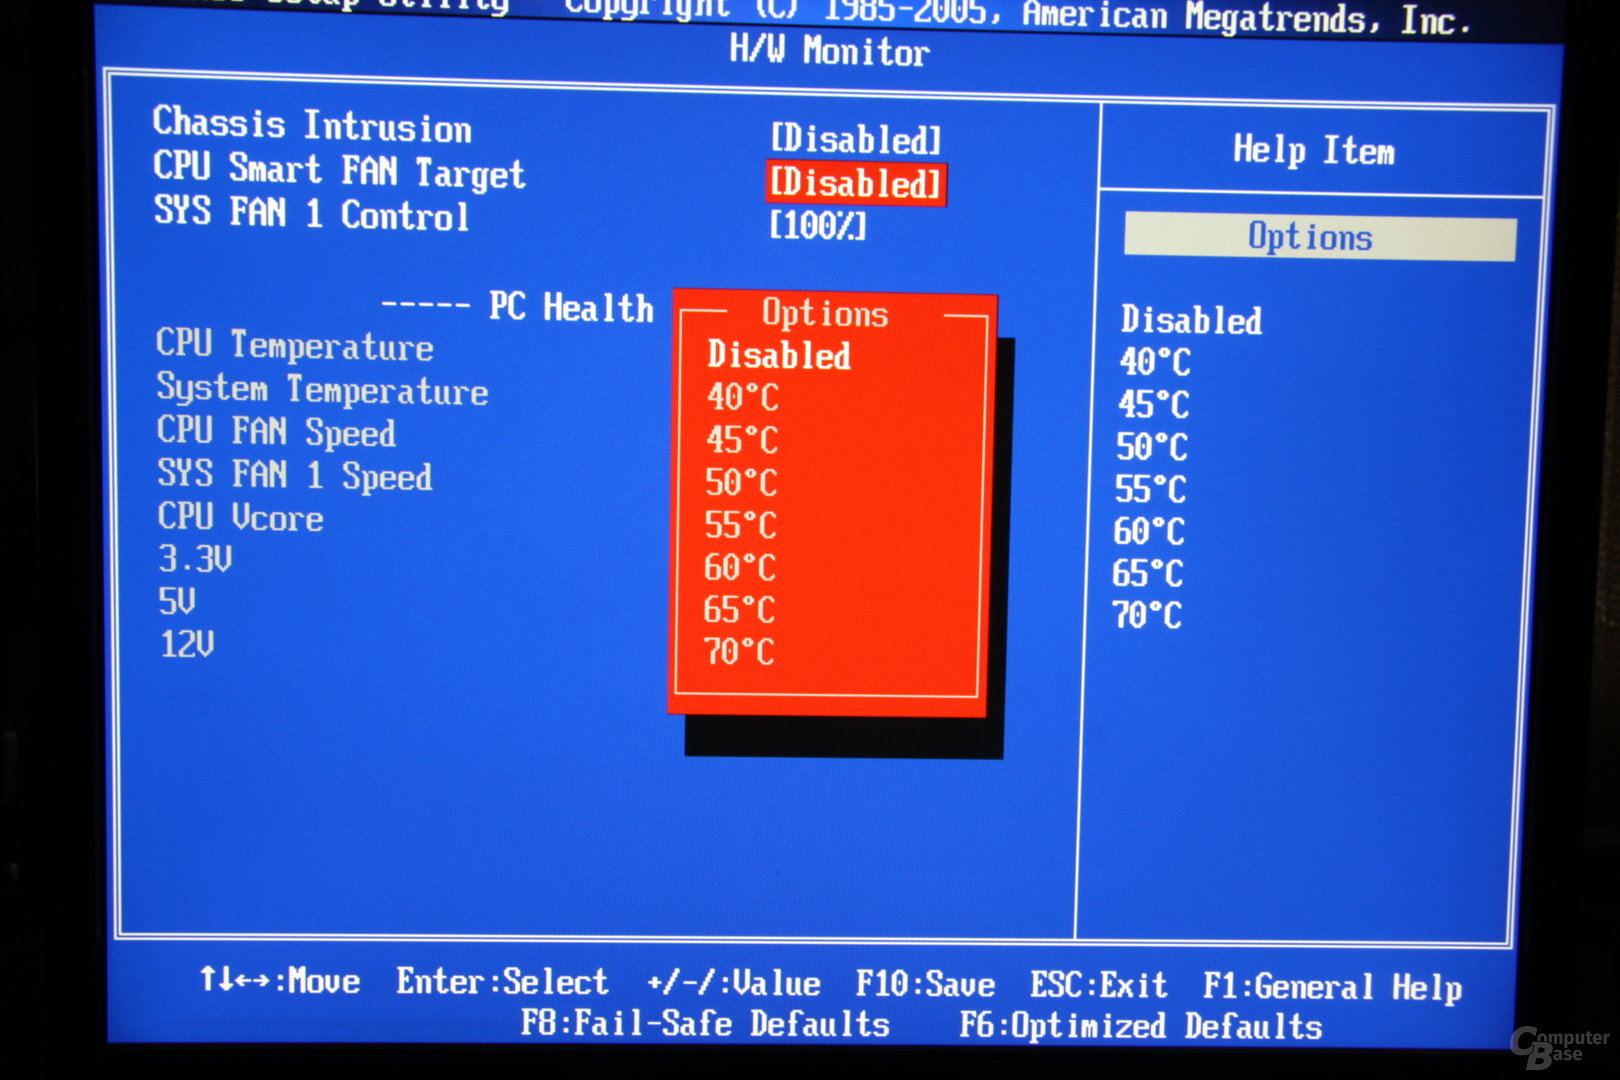 MSI P7NGM-Digital (GeForce 9300) BIOS